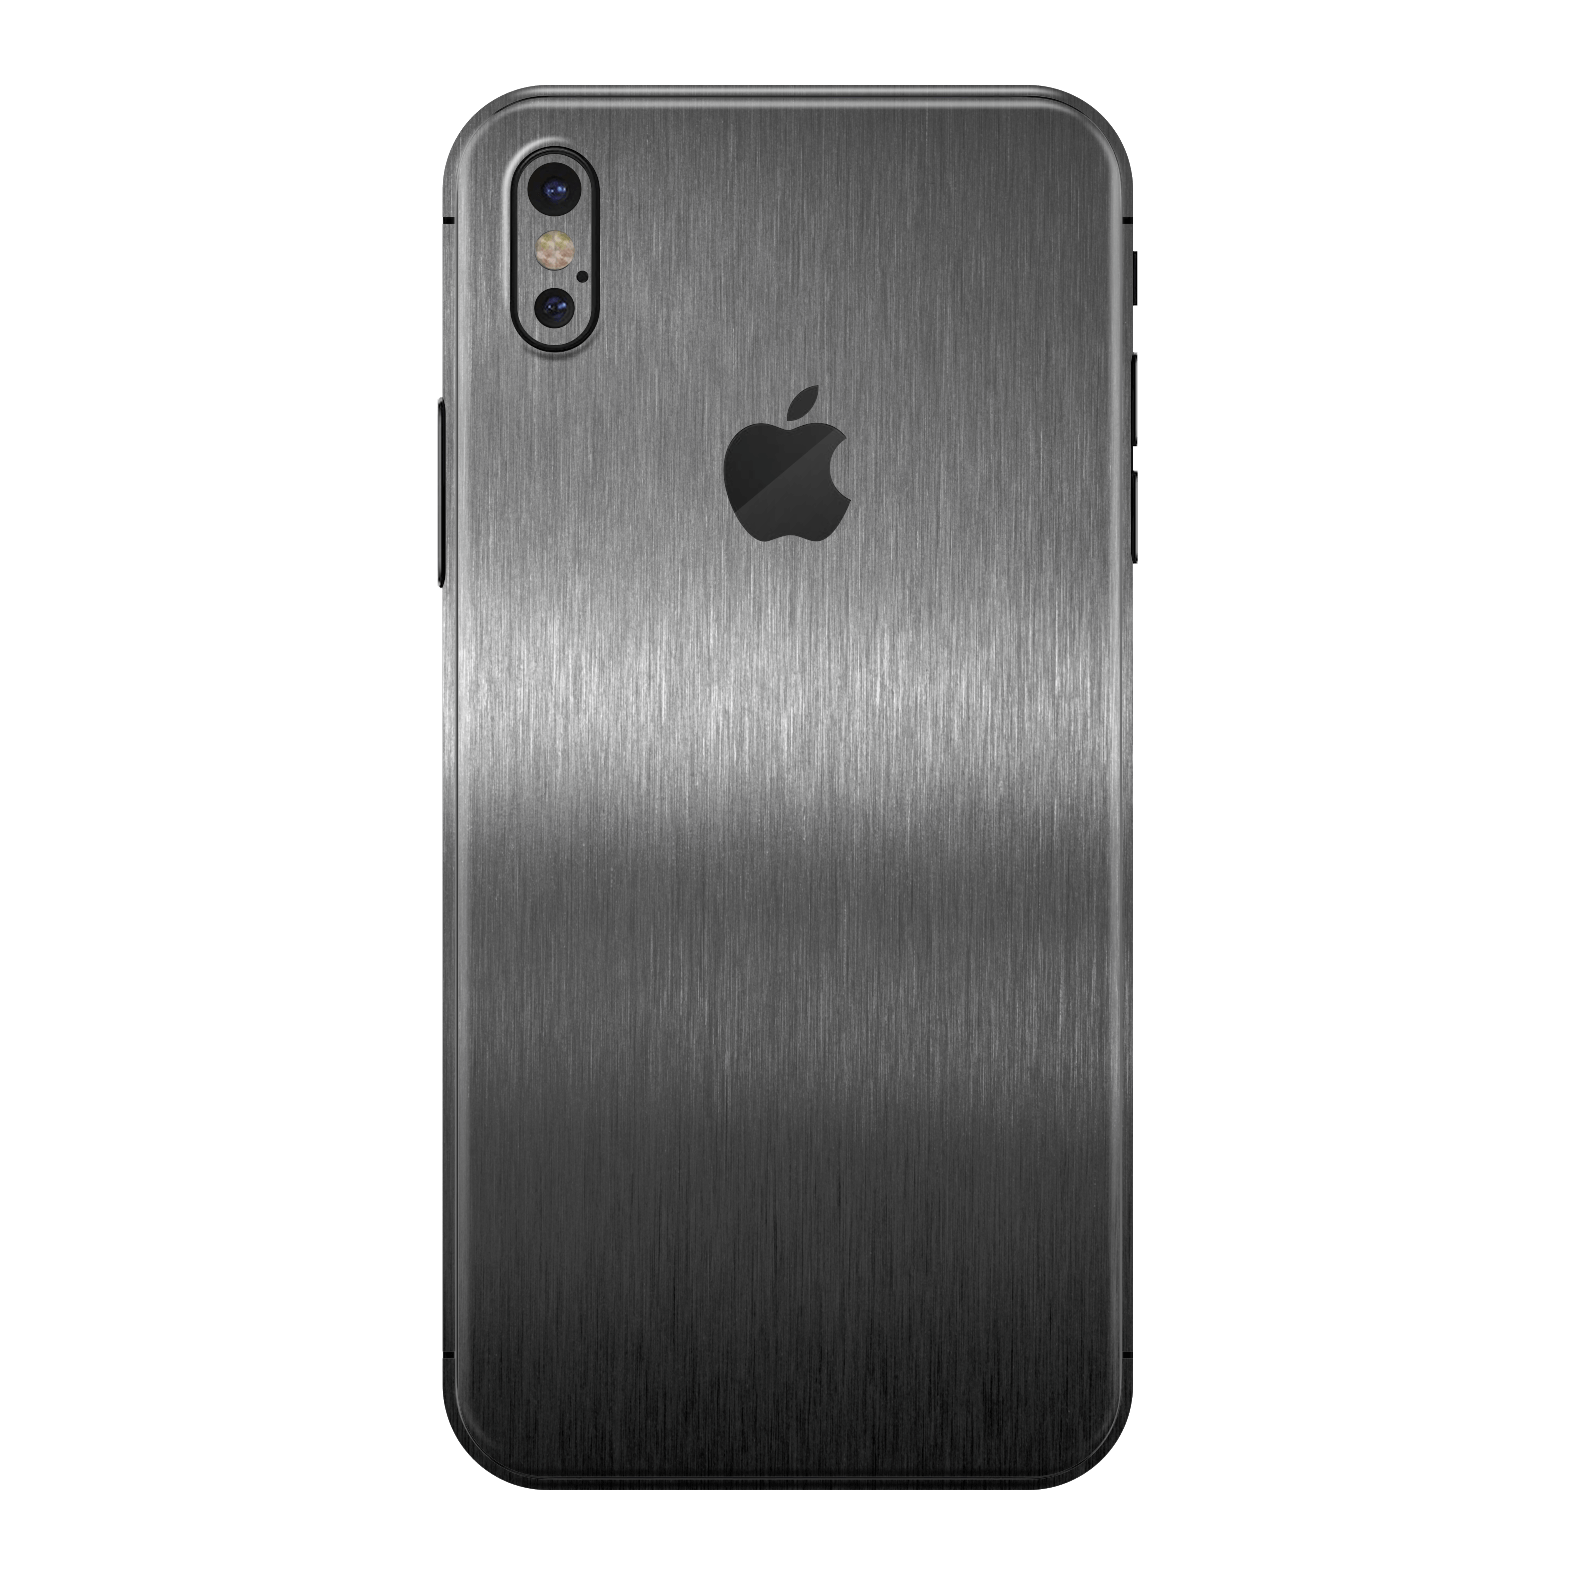 iPhone XS Brushed Metal Titanium Metallic Skin Wrap Sticker Decal Cover Protector by EasySkinz | EasySkinz.com